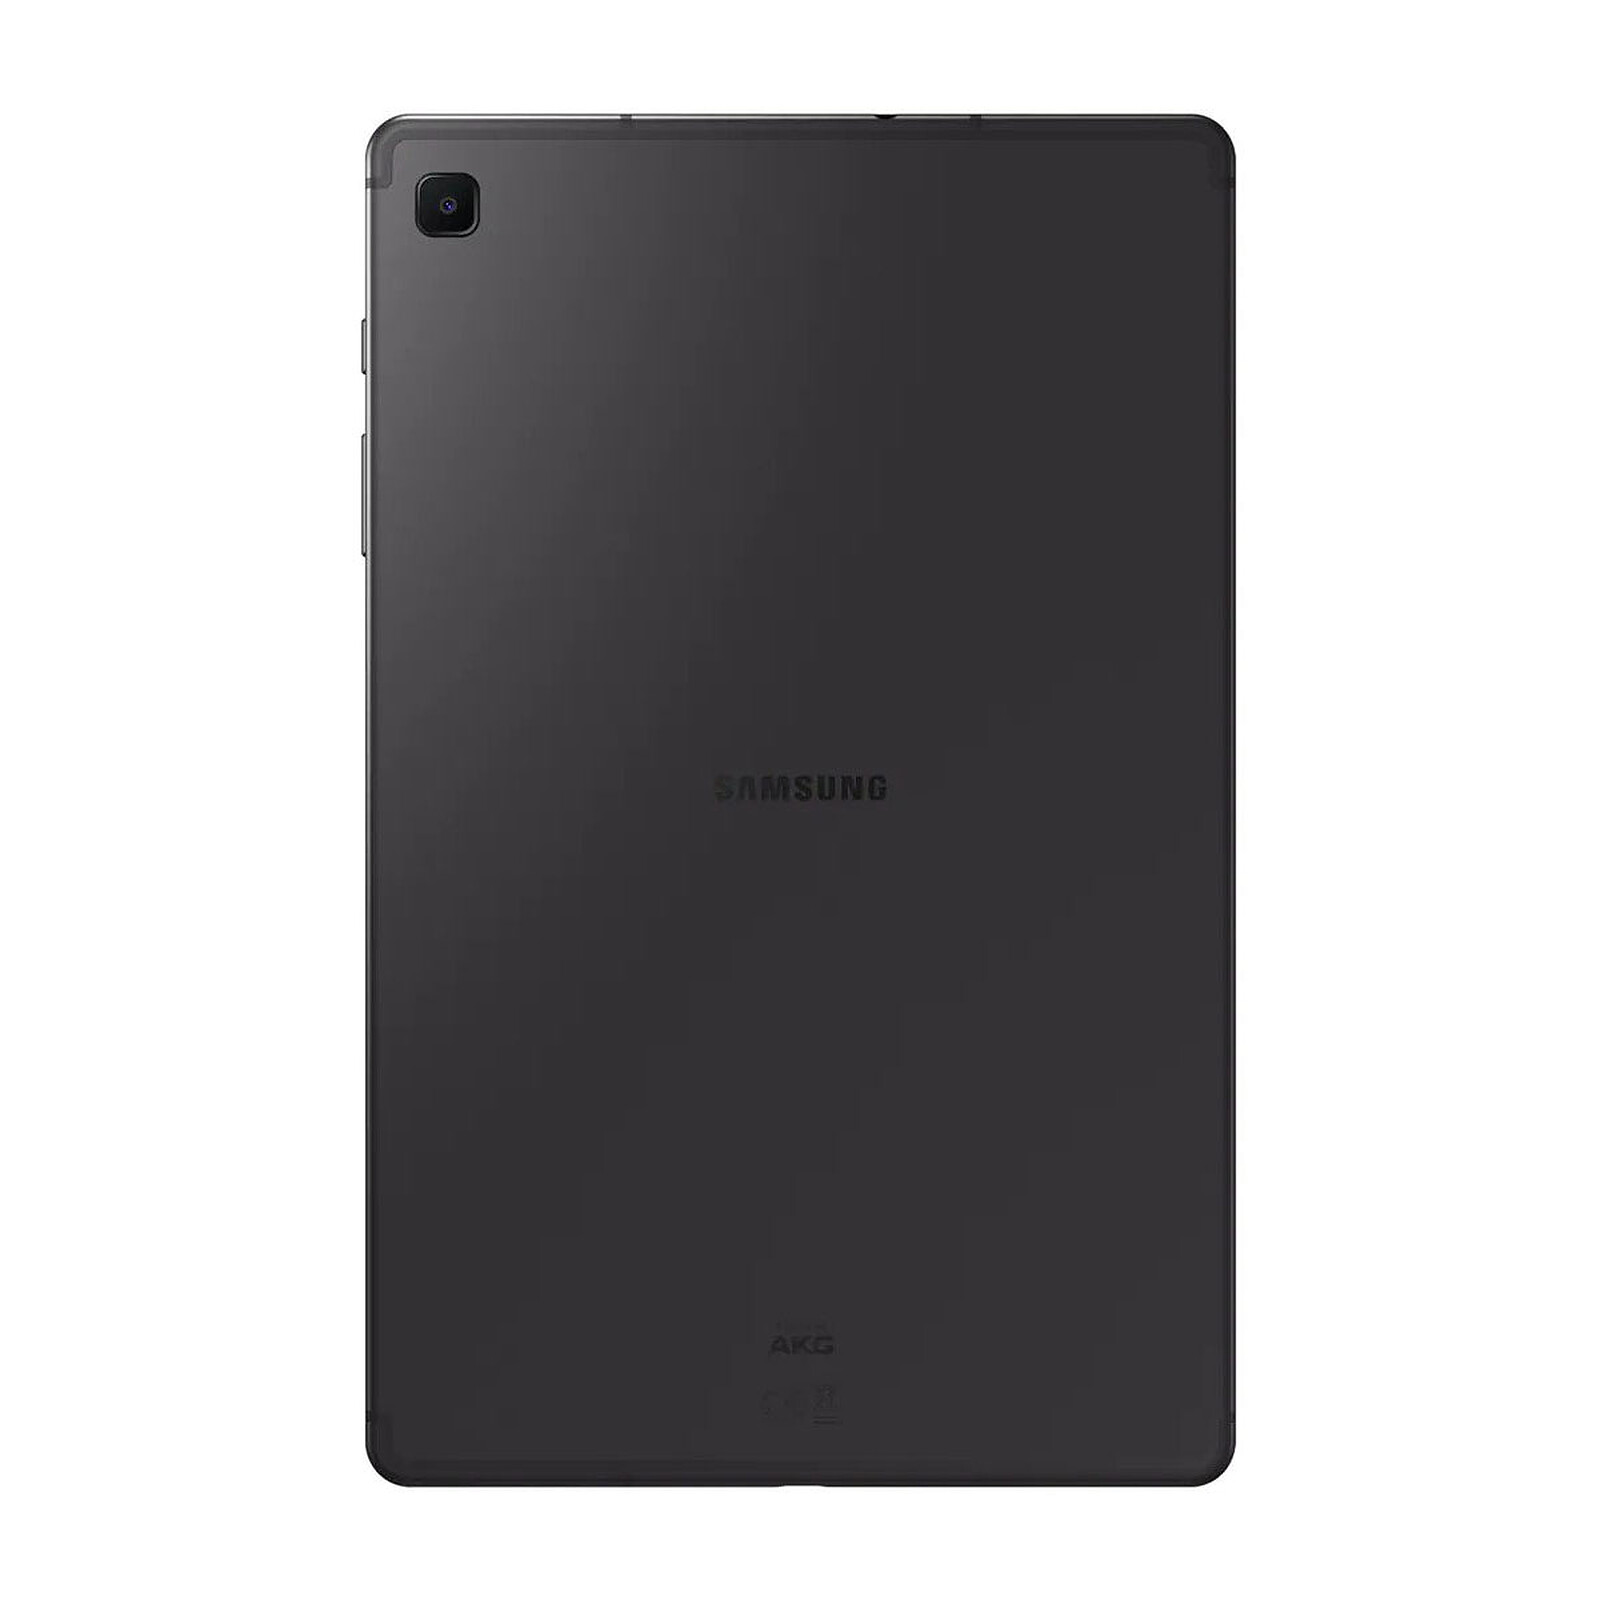 Samsung Galaxy Tab S6 Lite - Full tablet specifications